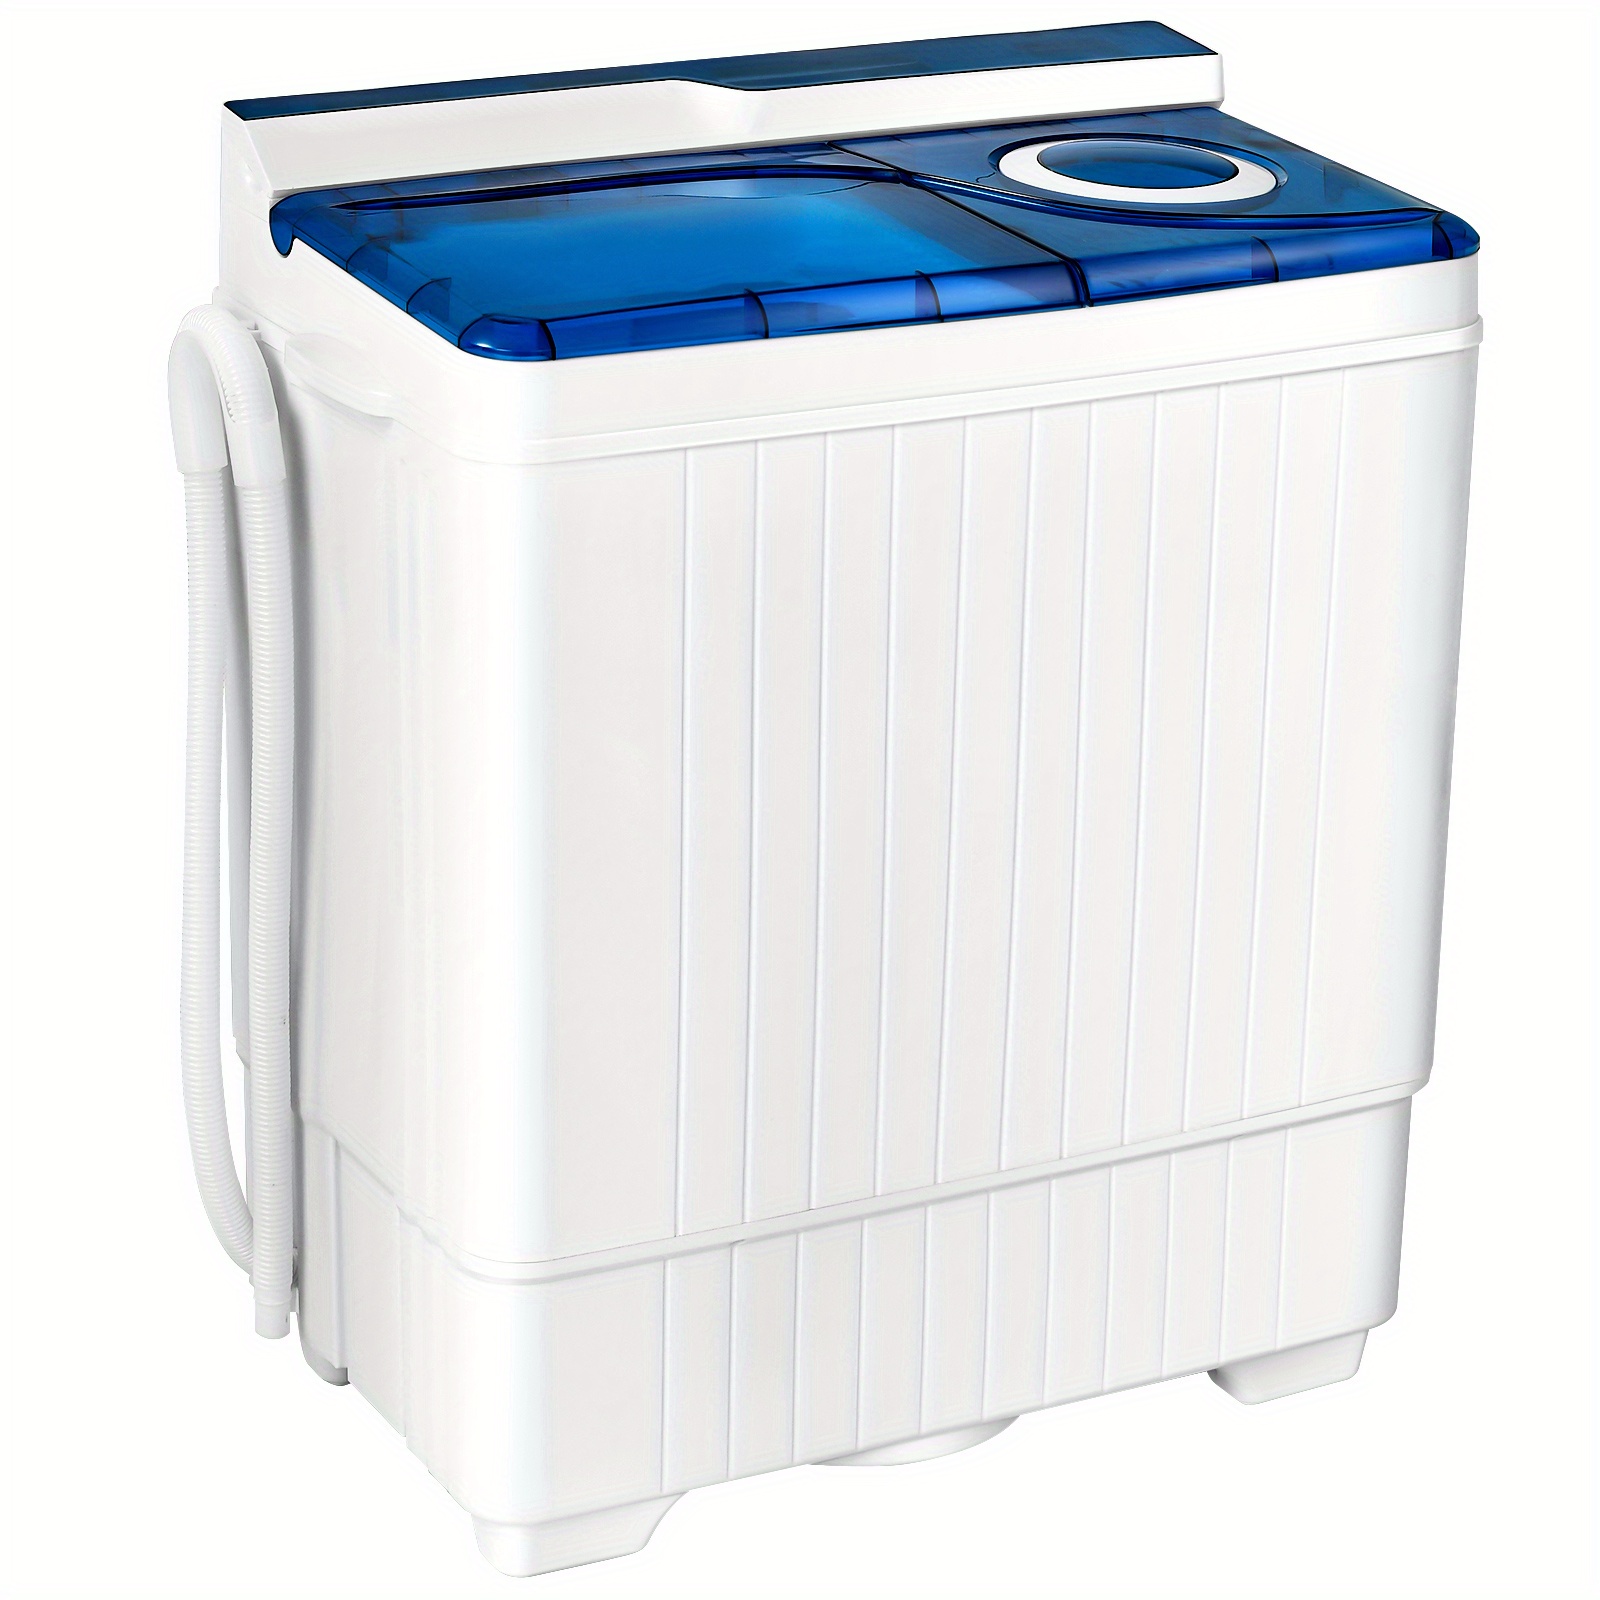 

Lifezeal 26lbs Portable Semi-automatic Washing Machine W/built-in Drain Pump Blue